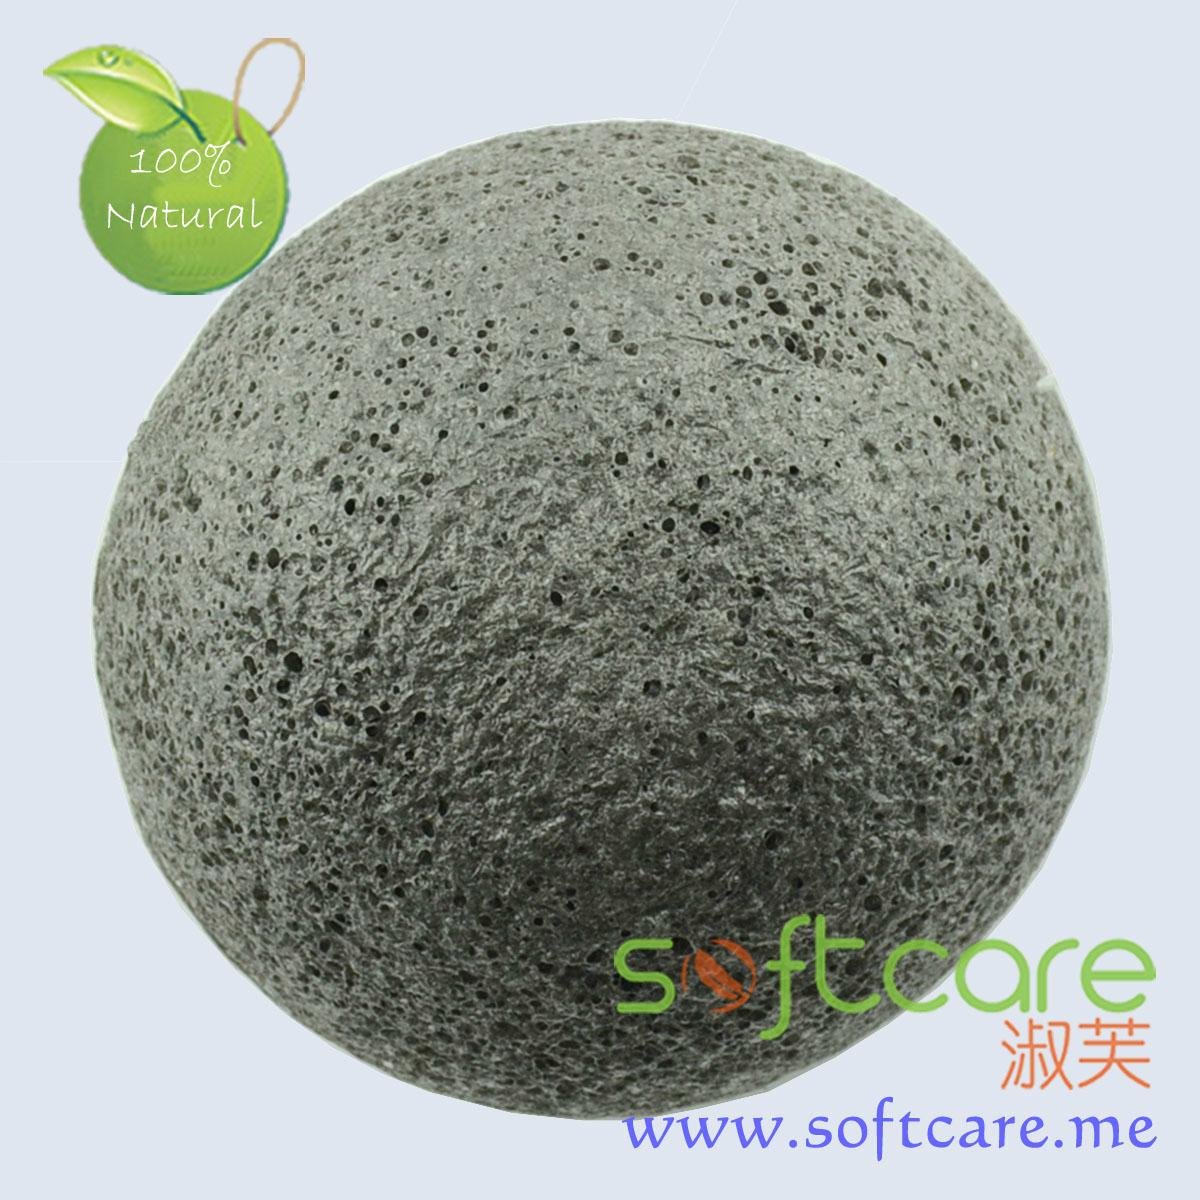 Half ball type 100% natural bamboo charcoal facial cleansing konjac sponge 3